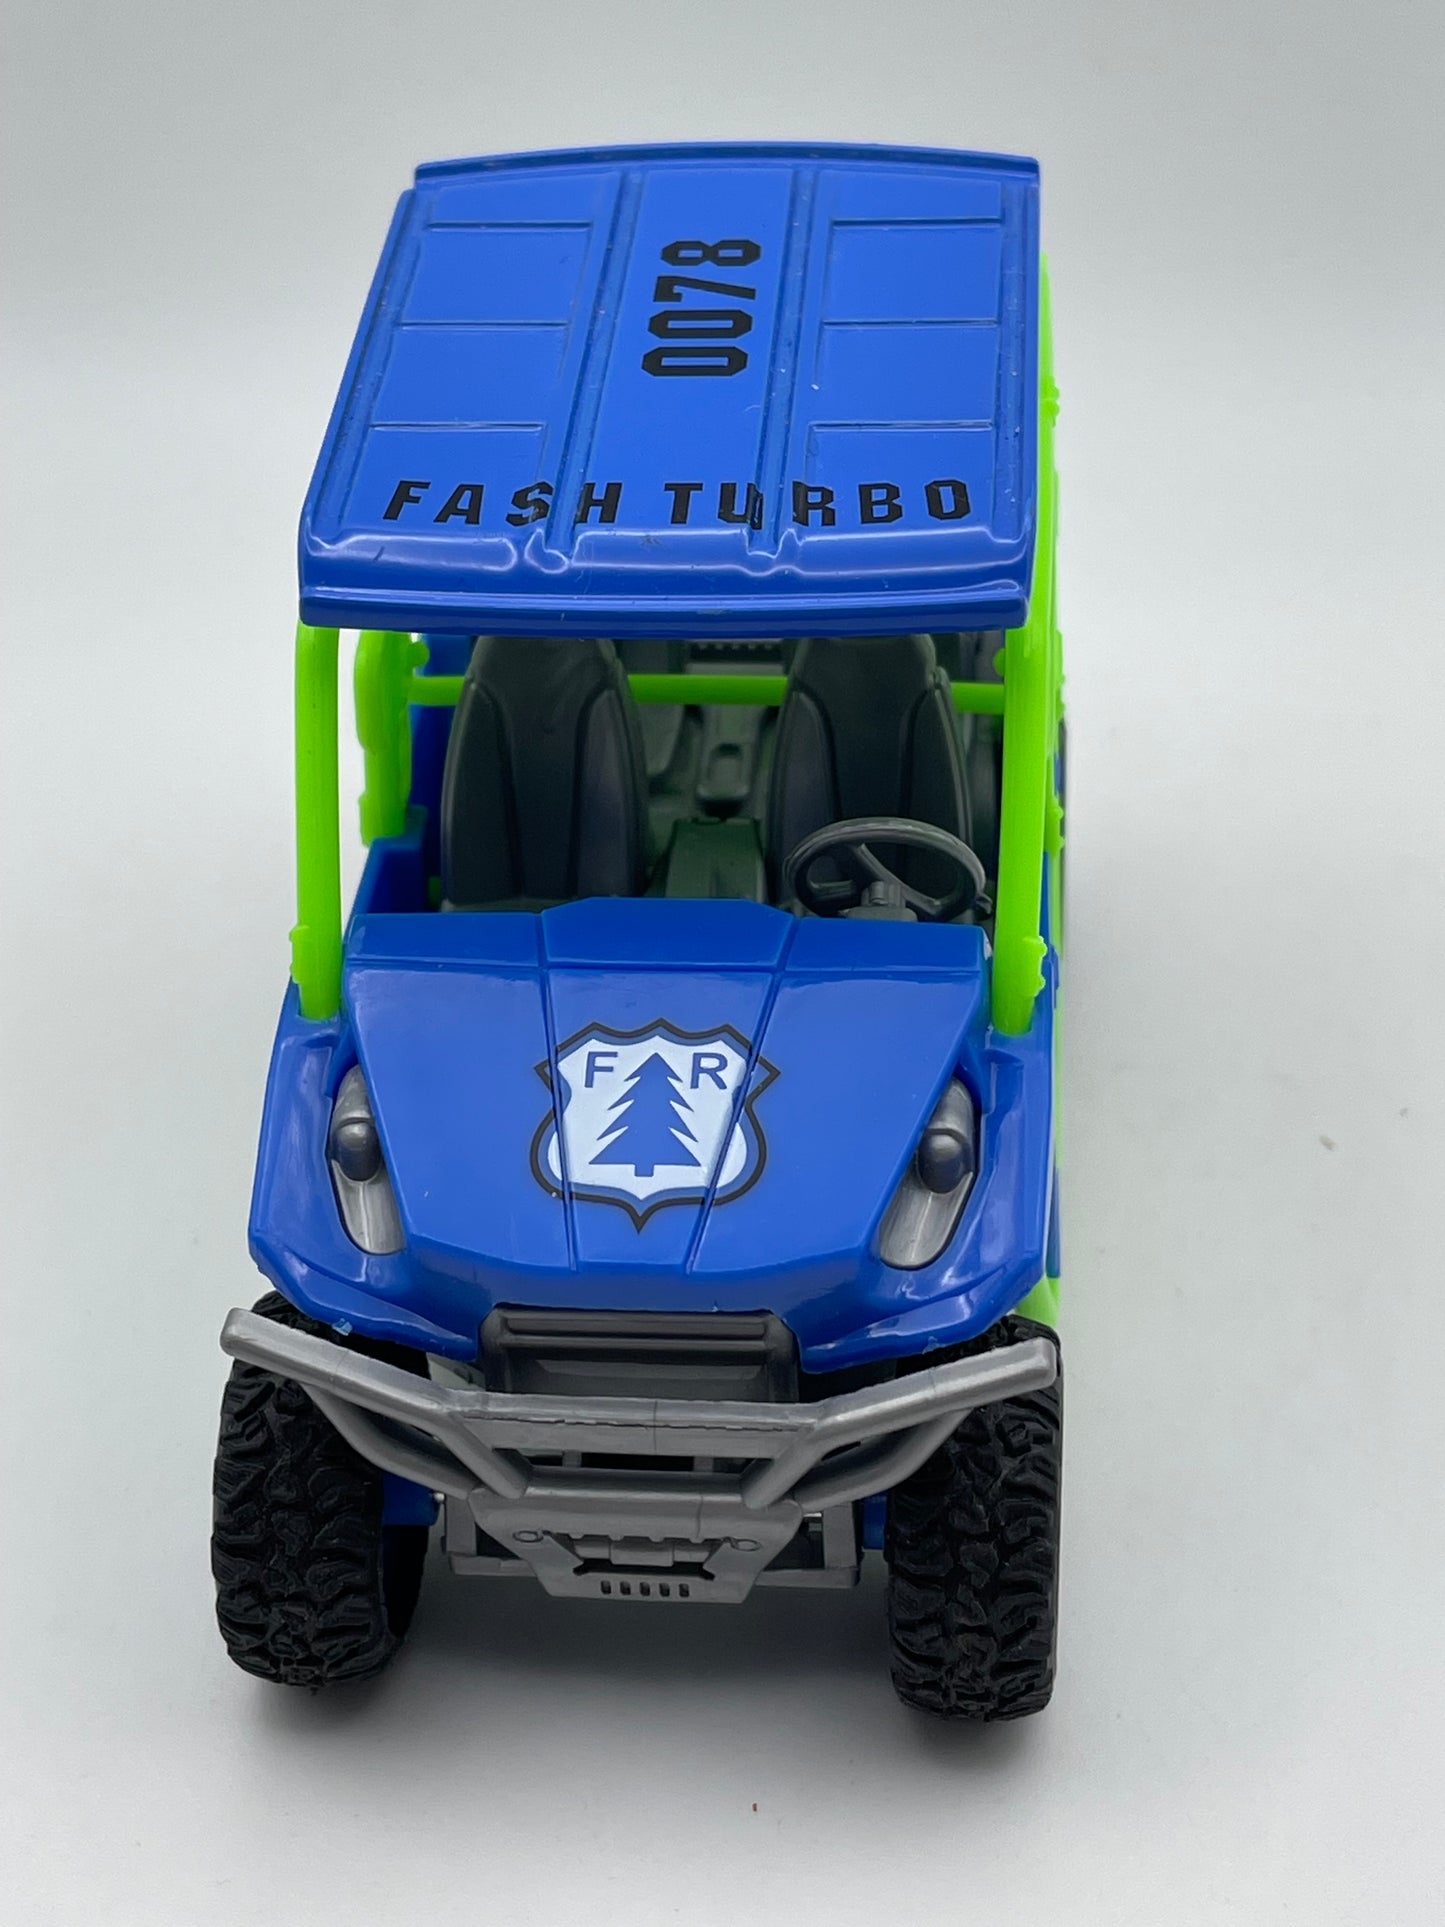 Off Road Cart - Fash Turbo #102926